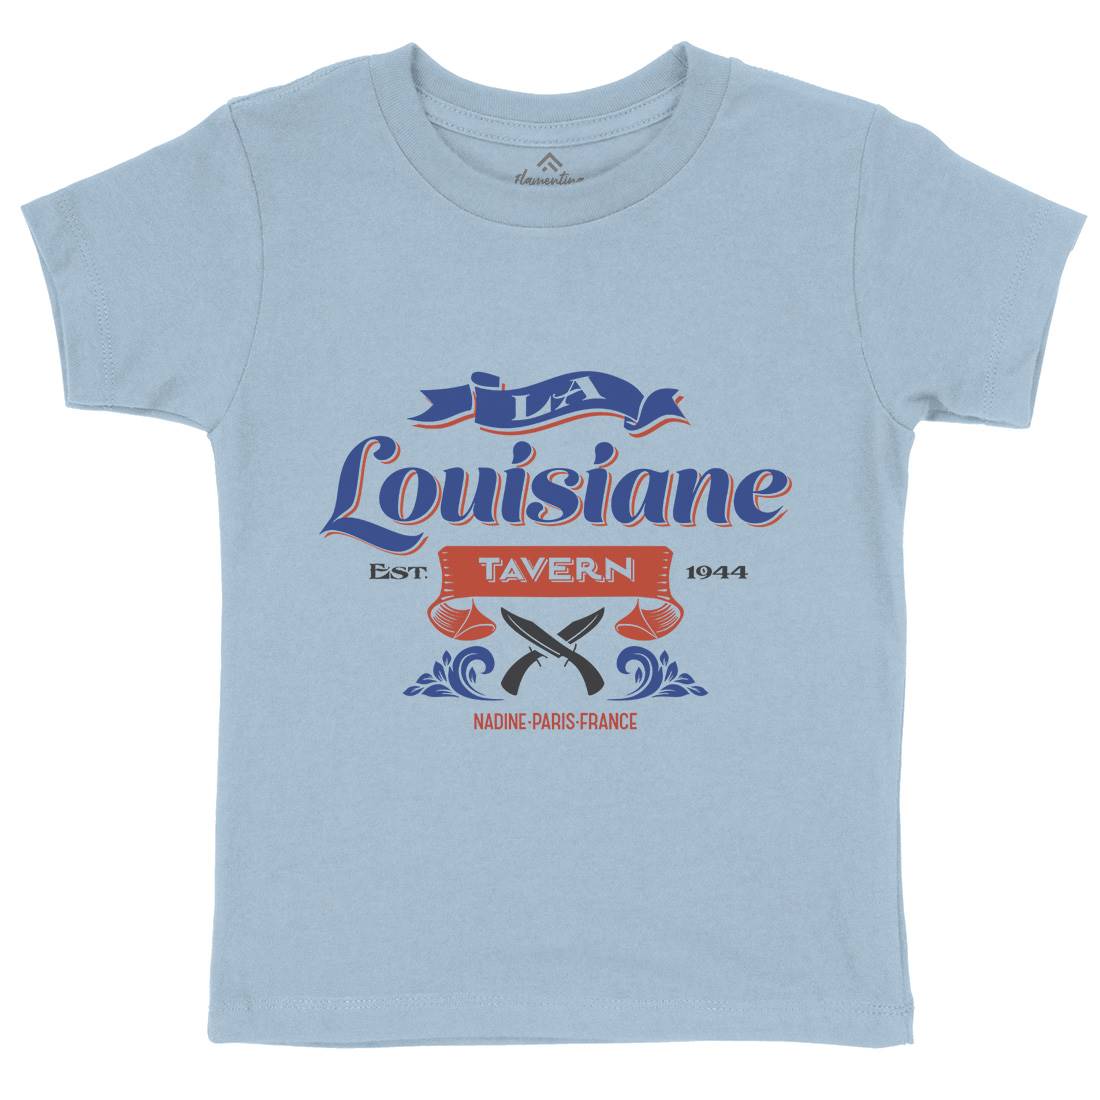 La Louisiane Tavern Kids Crew Neck T-Shirt Food D317